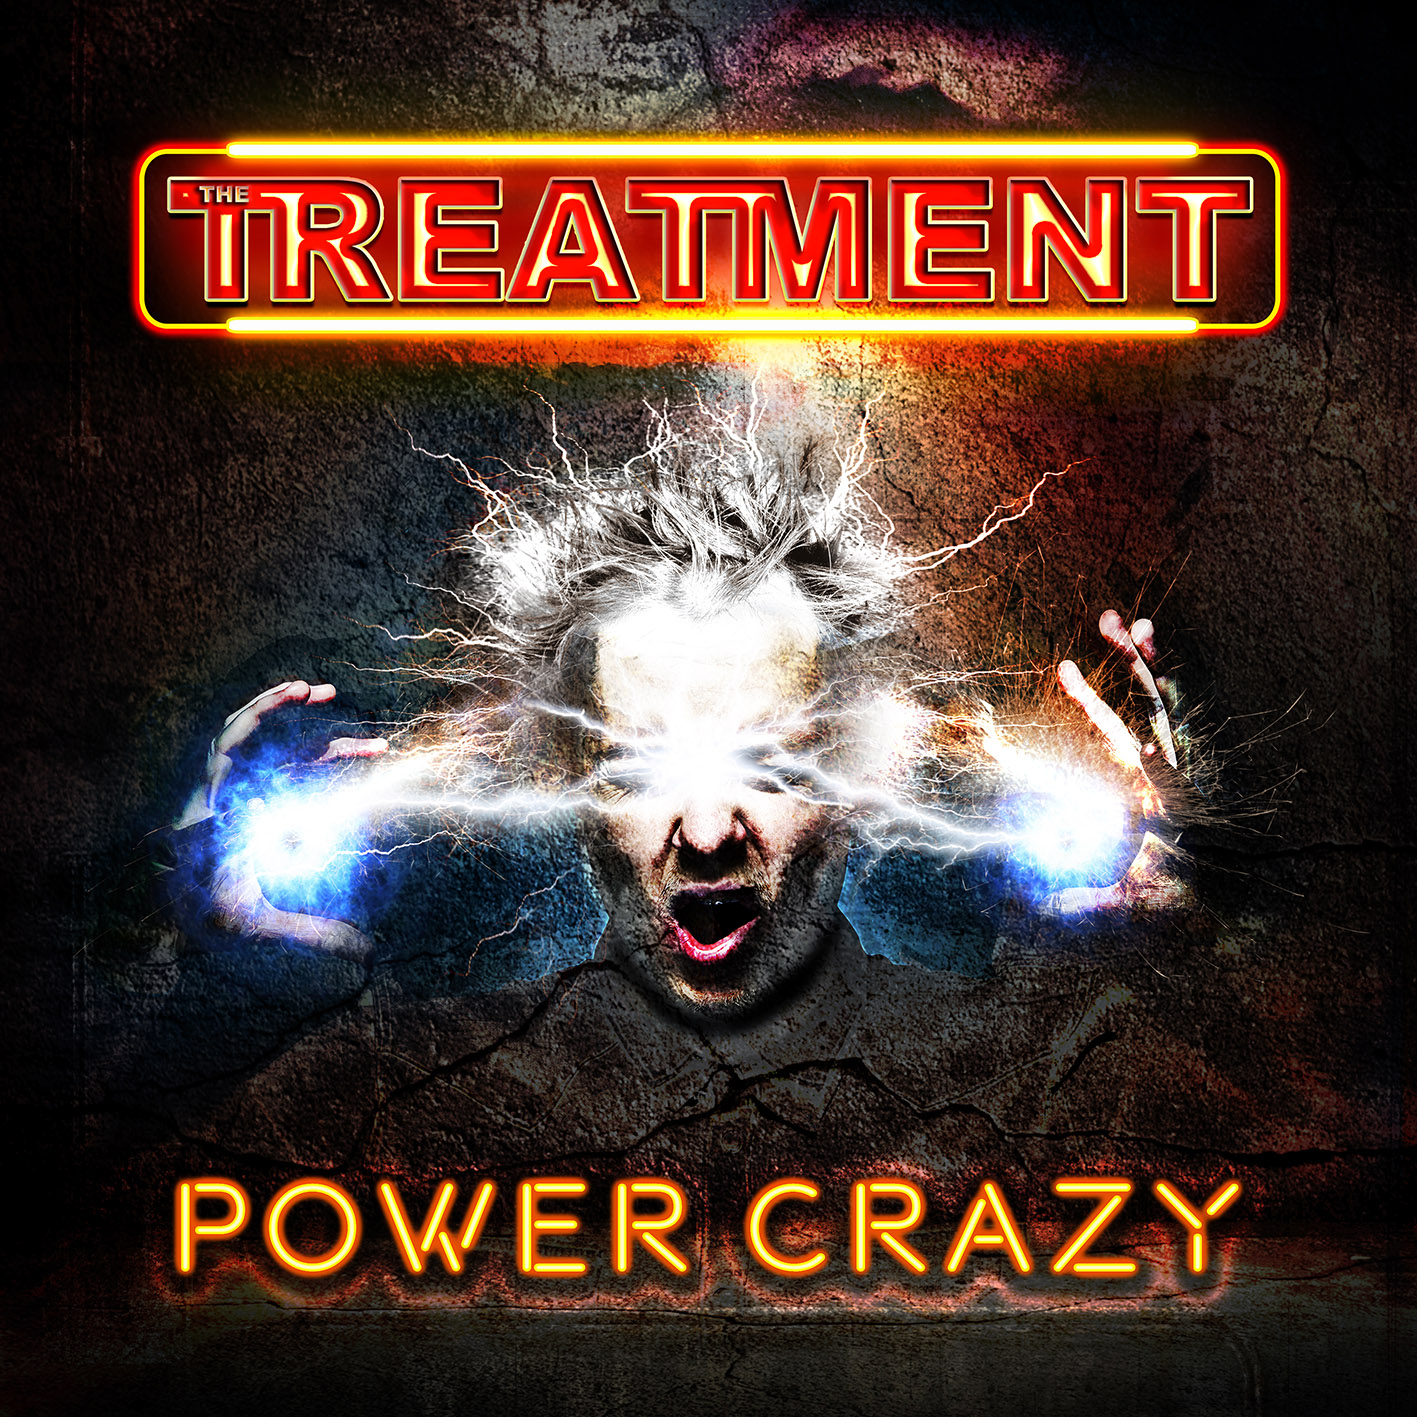 The Treatment - “Power Crazy”